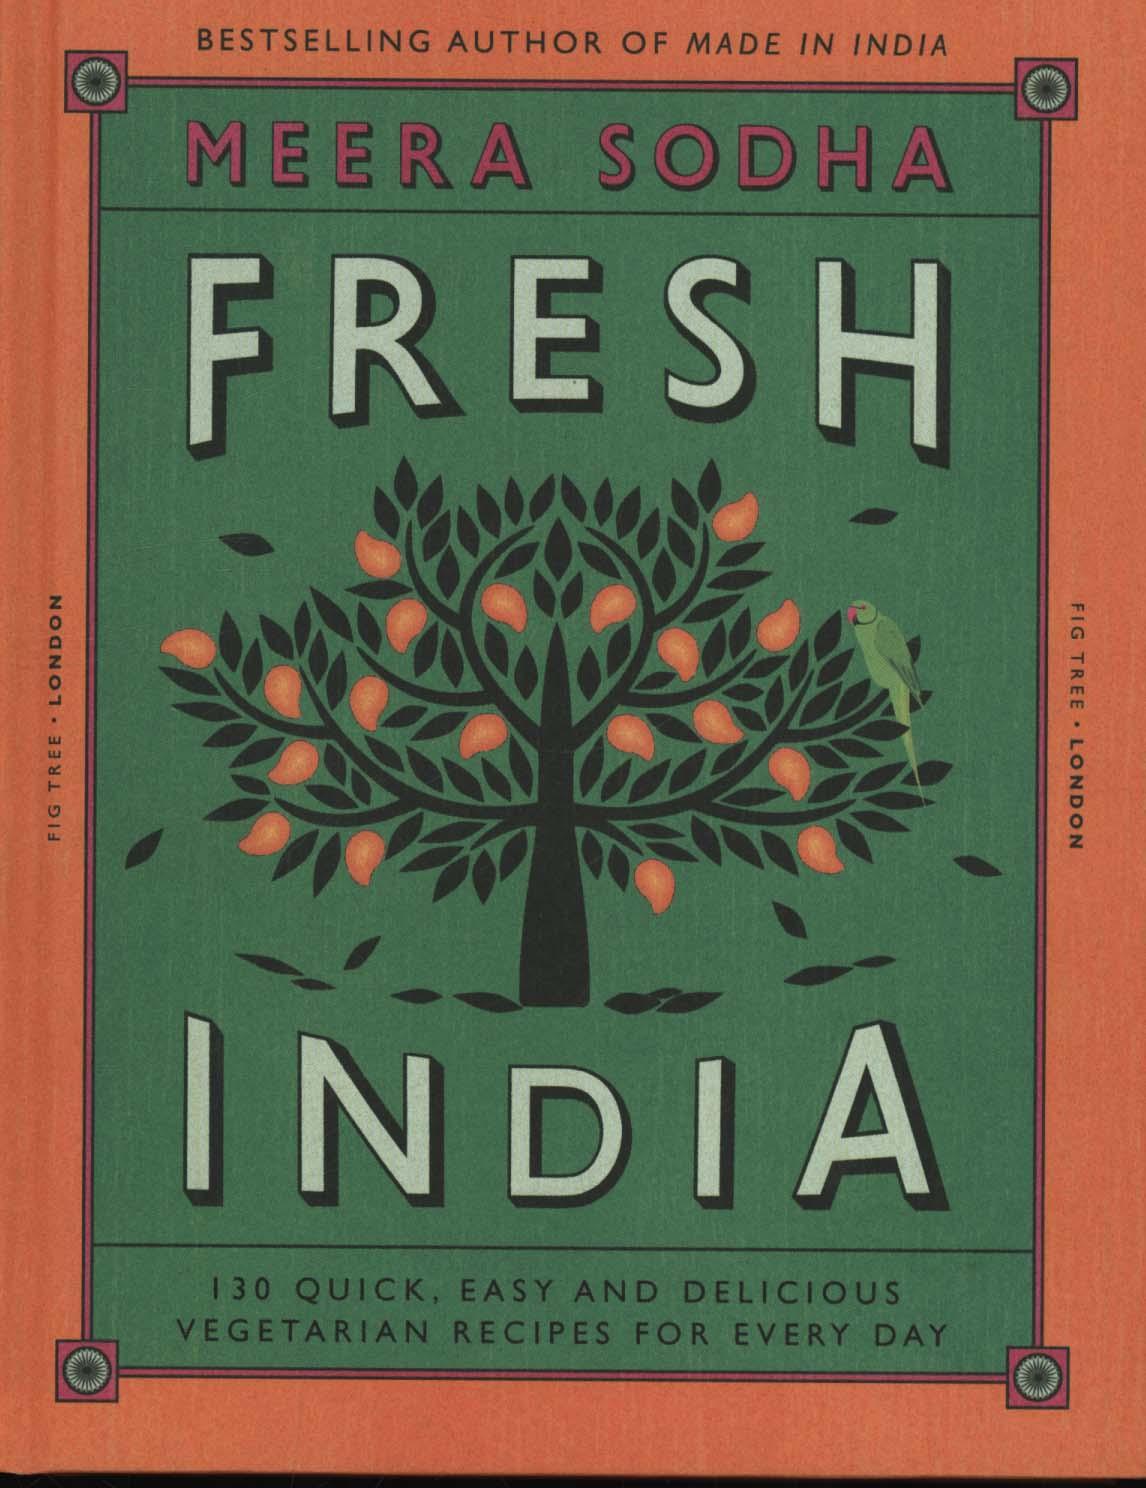 Fresh India - Meera Sodha